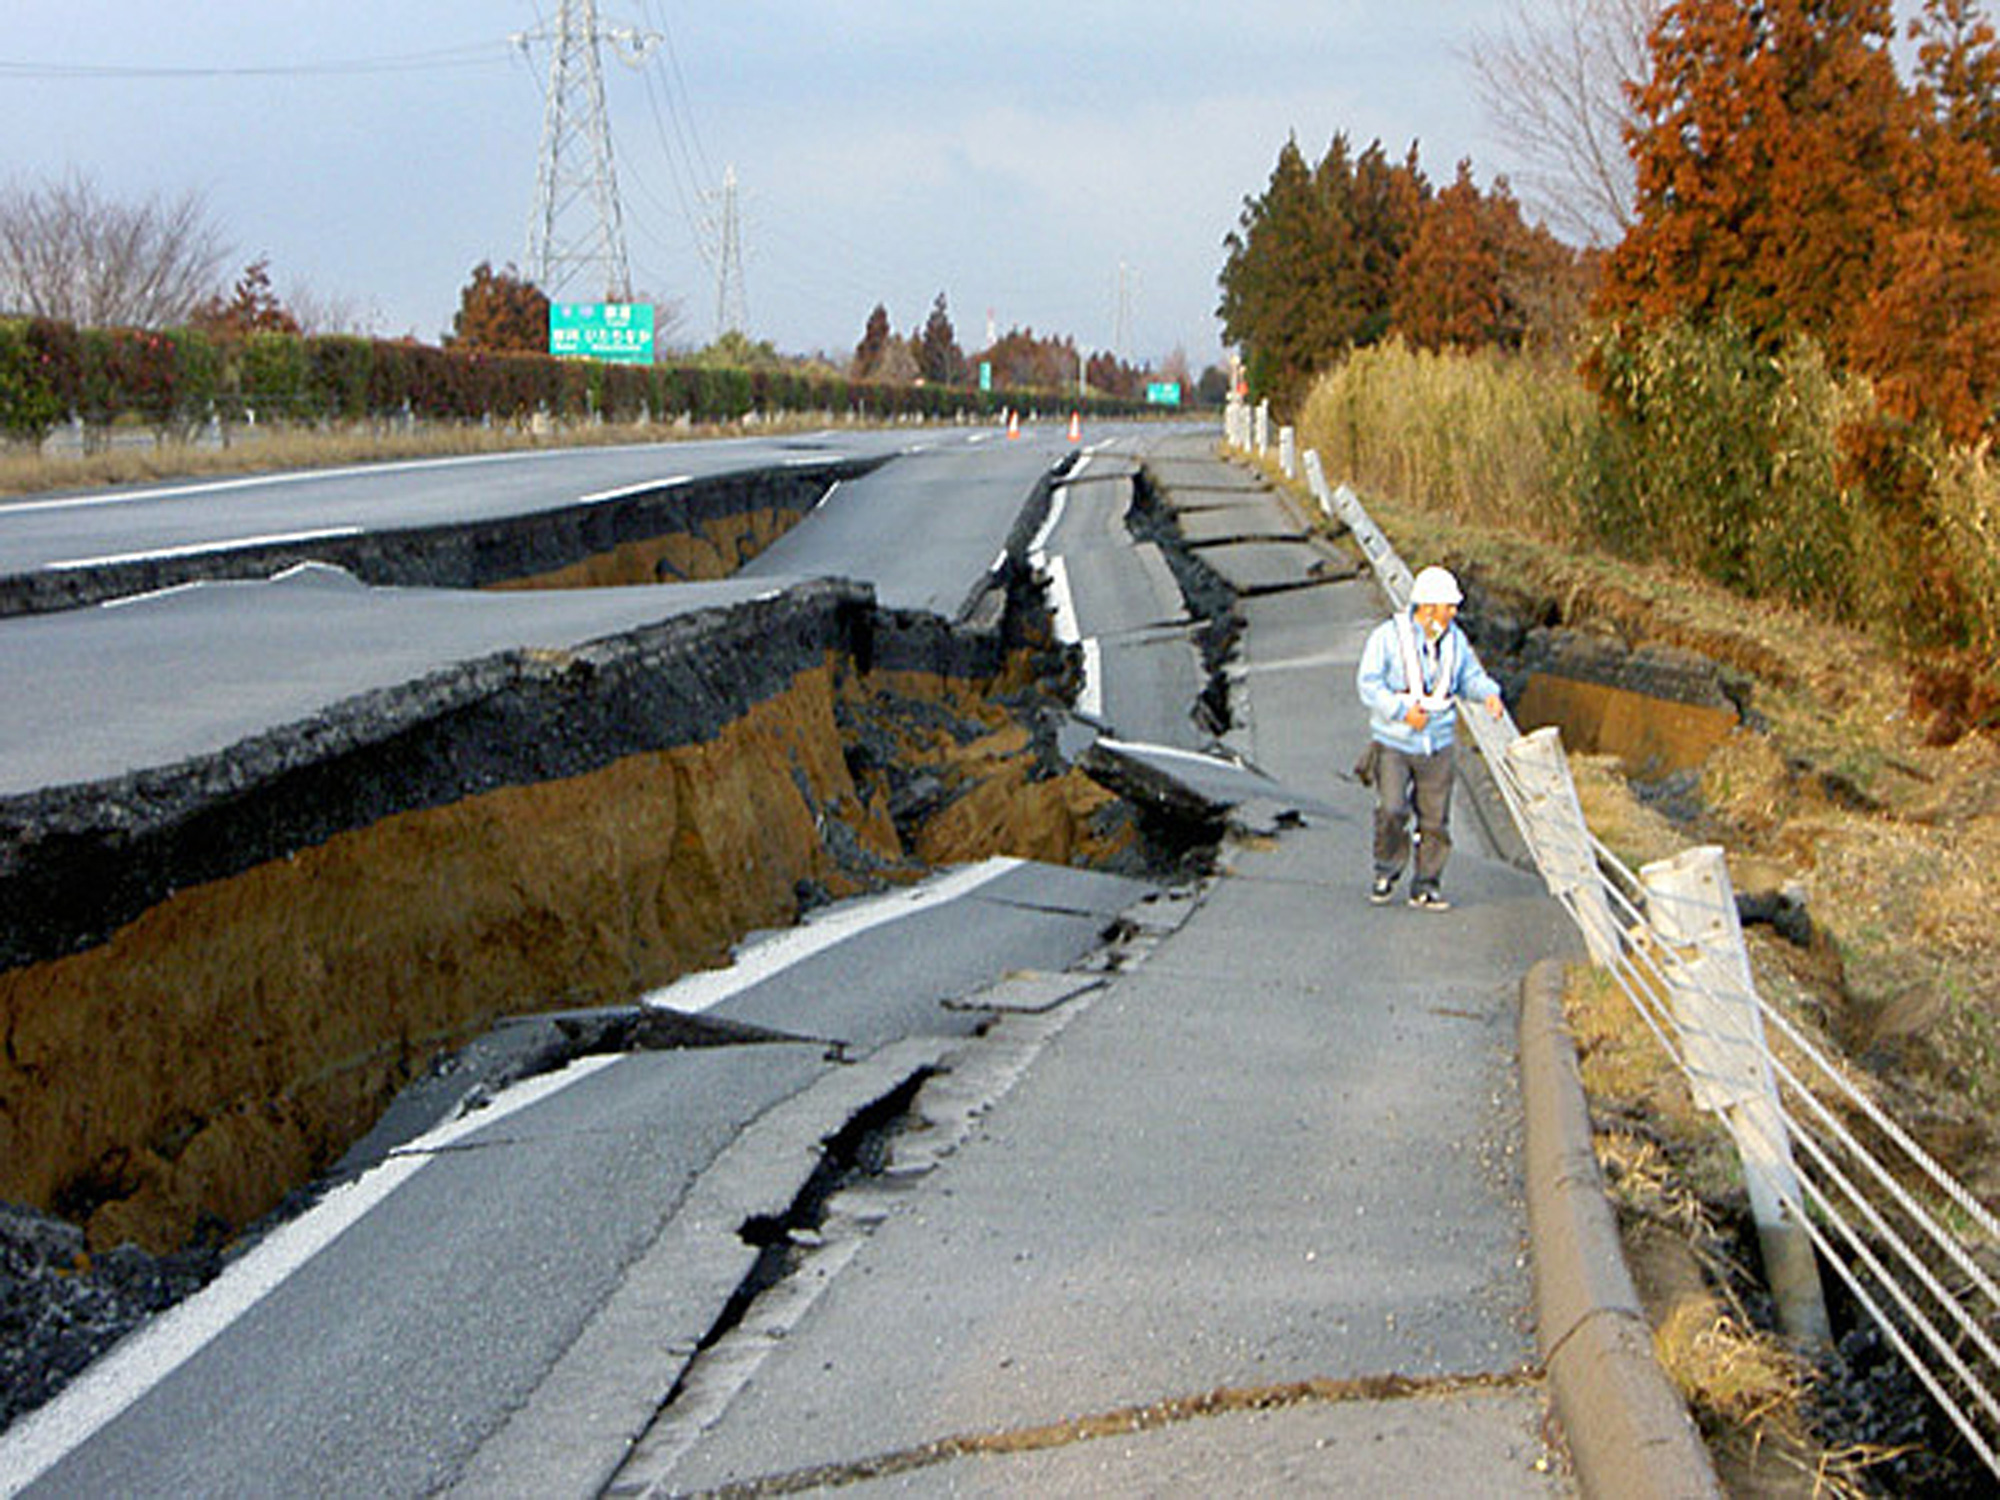 Japan earthquake how big was it? CBS News